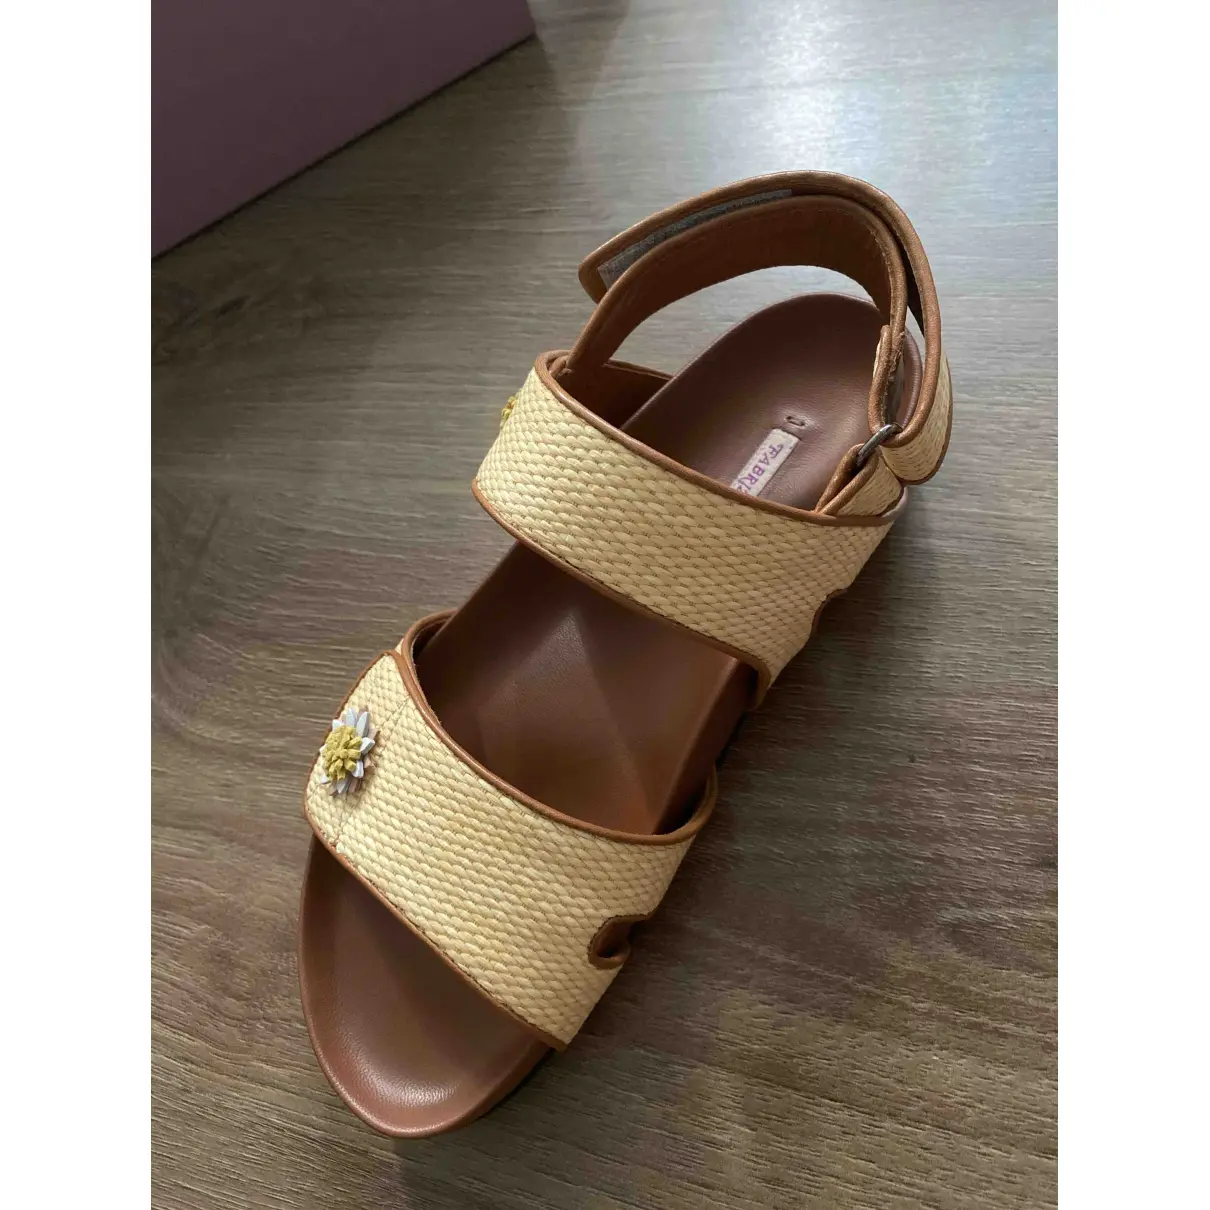 Buy Fabrizio Viti Leather sandals online